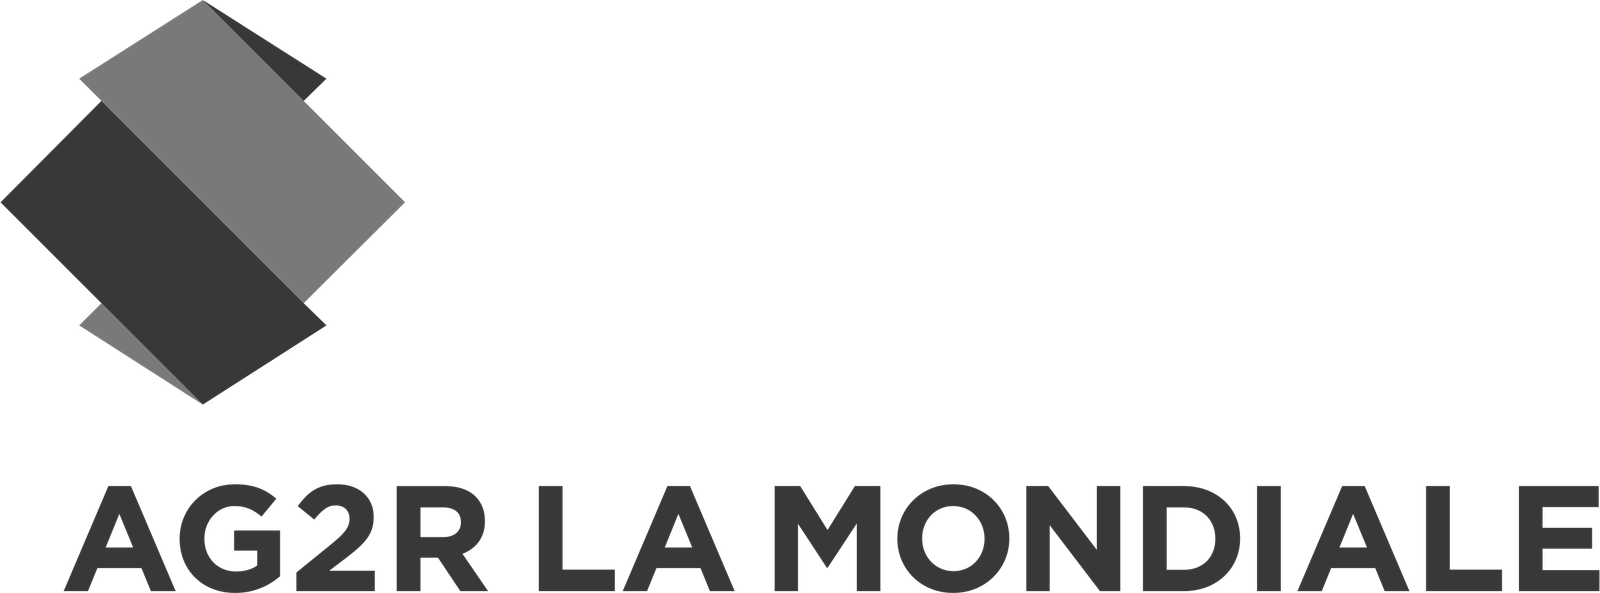 AG2R_La_Mondiale_logo